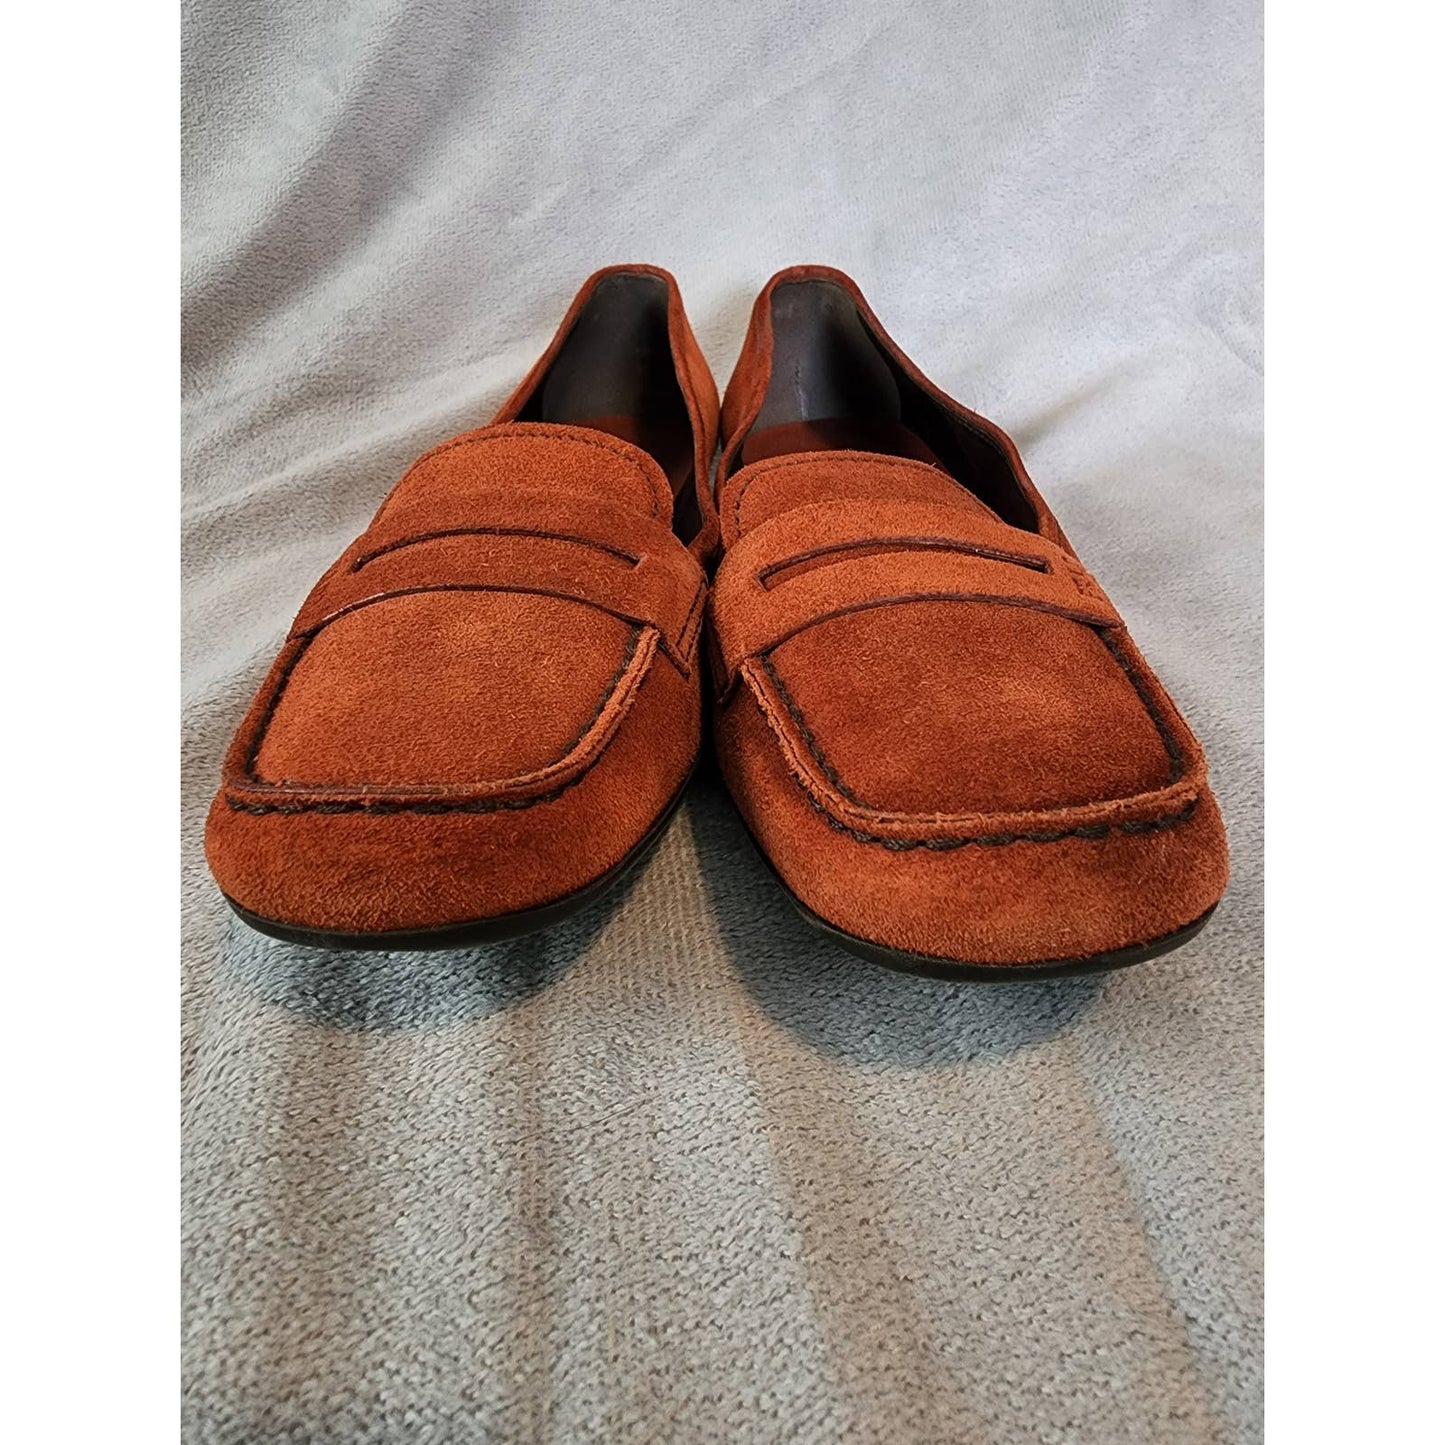 Prada Orange Suede Loafers